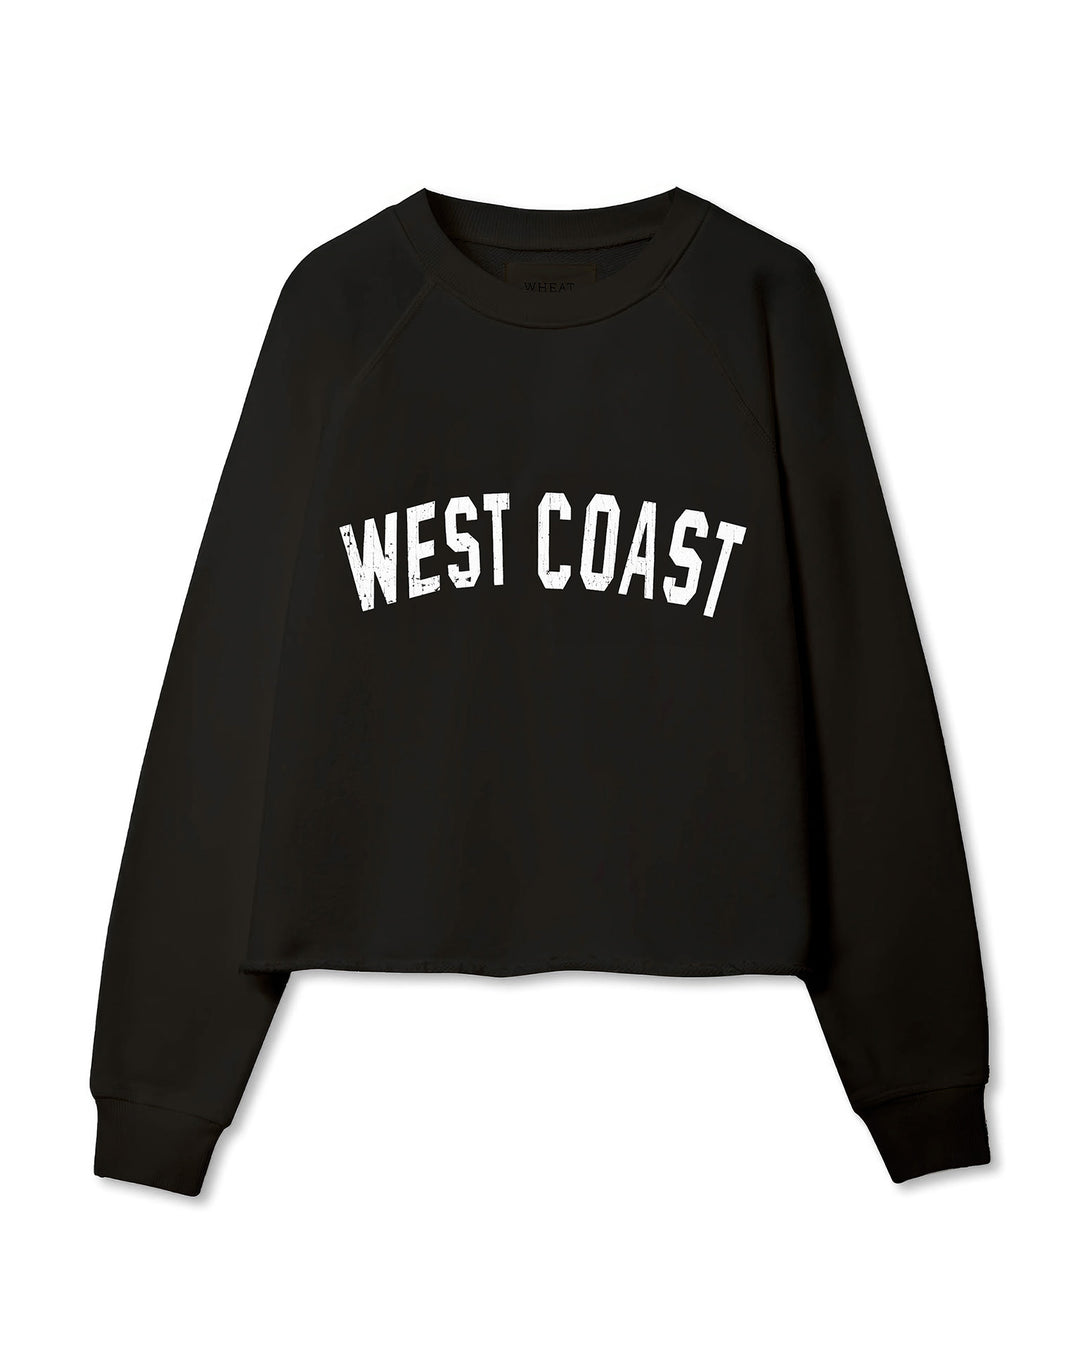 West Coast Cut Off Sweatshirt